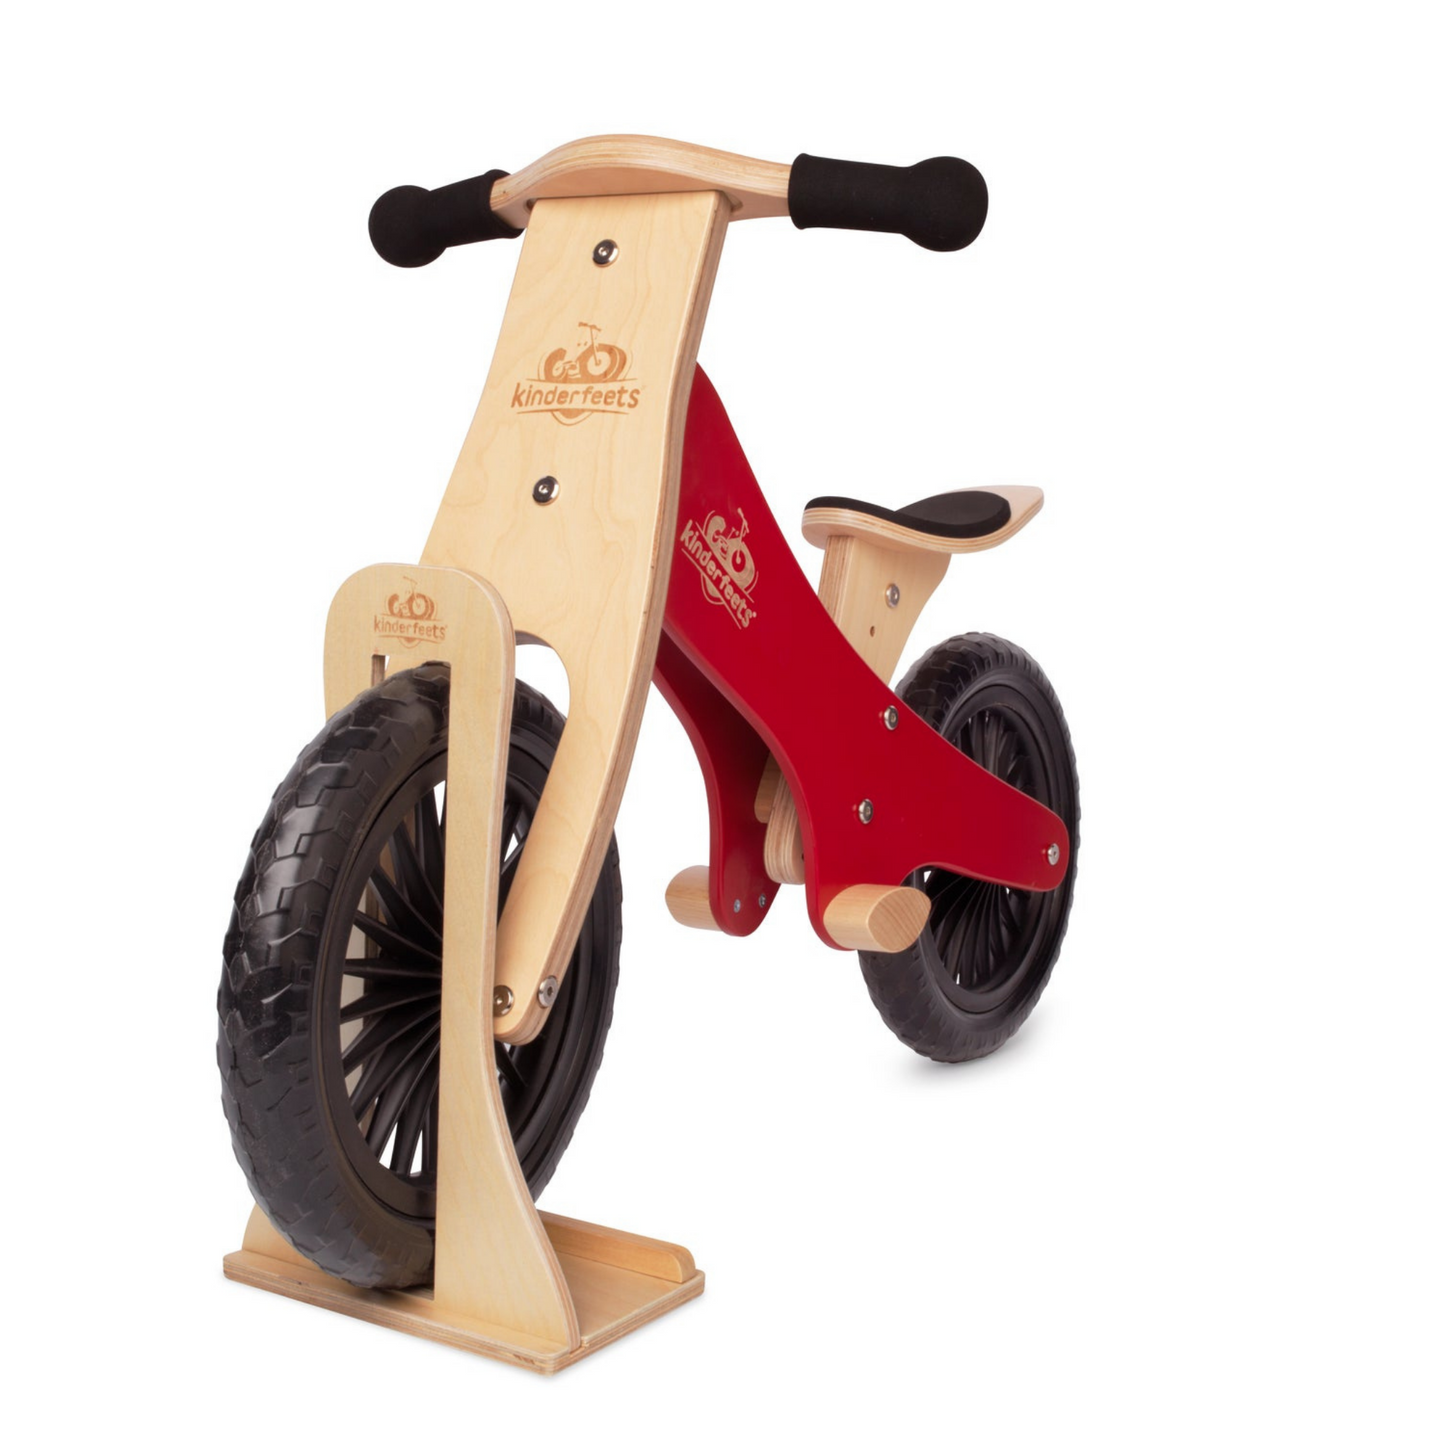 Kinderfeets wooden bike stand